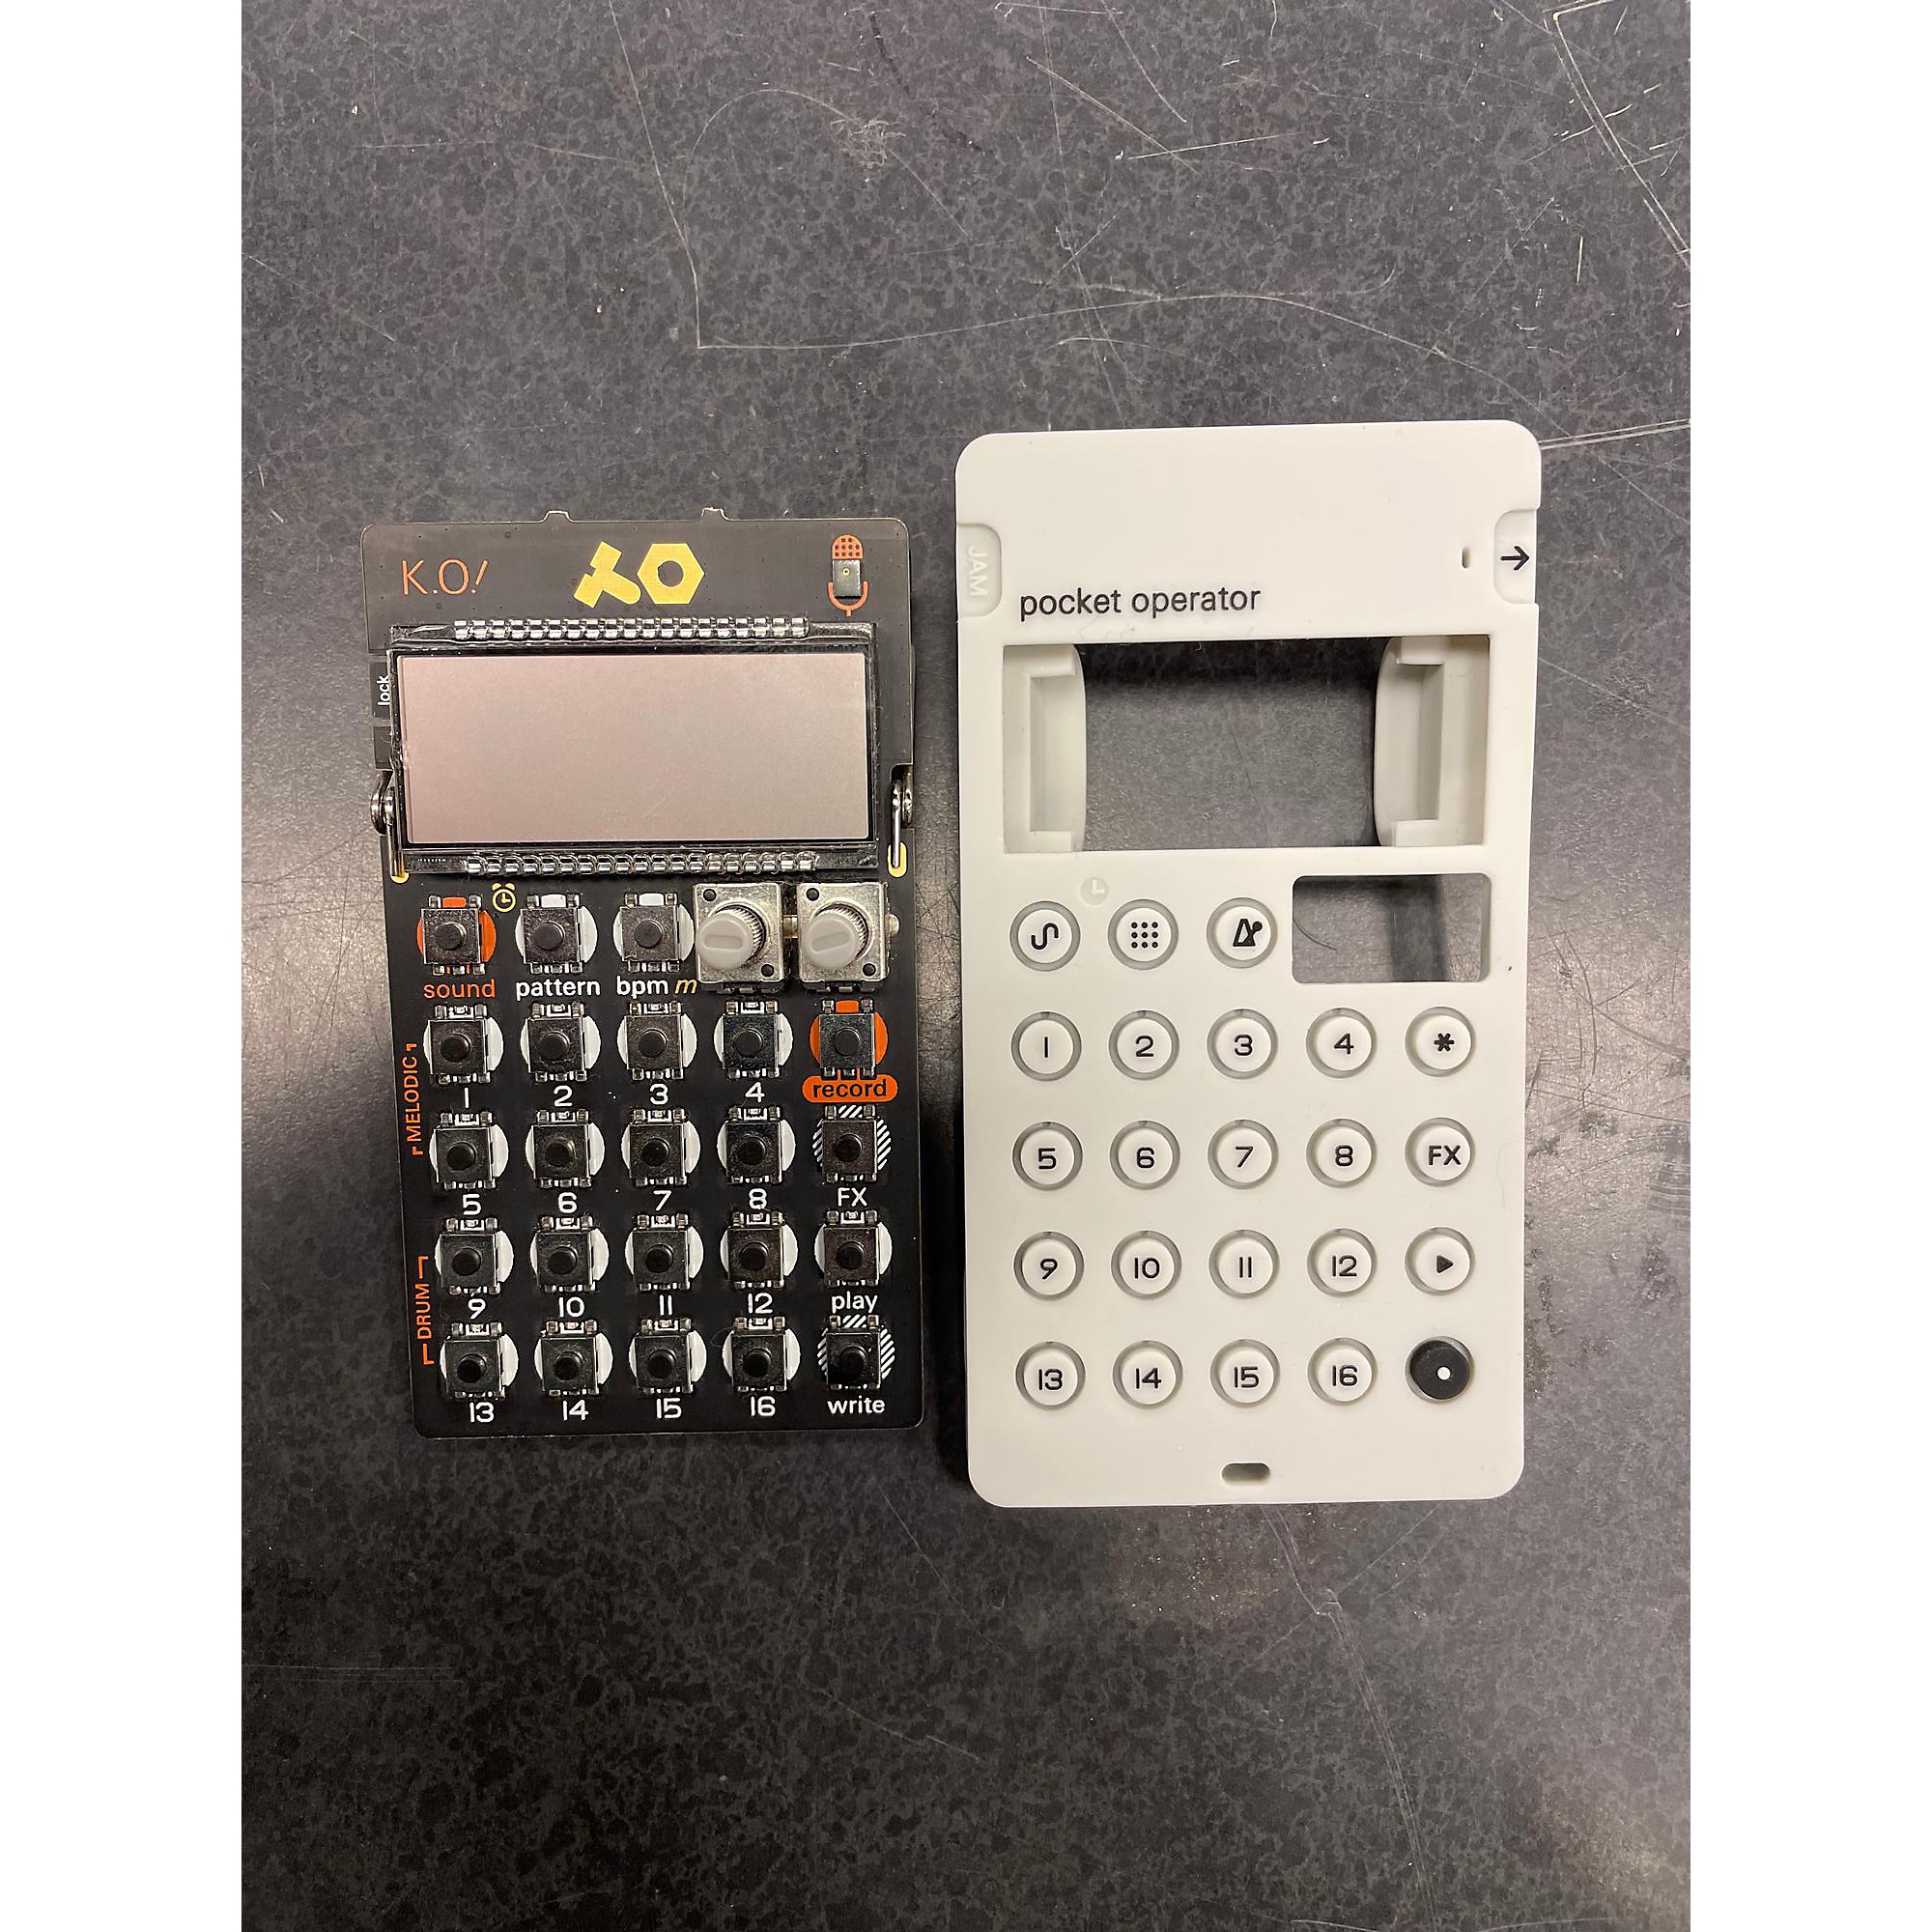 Used teenage engineering Pocket Operator K.O! PO-33 Production 